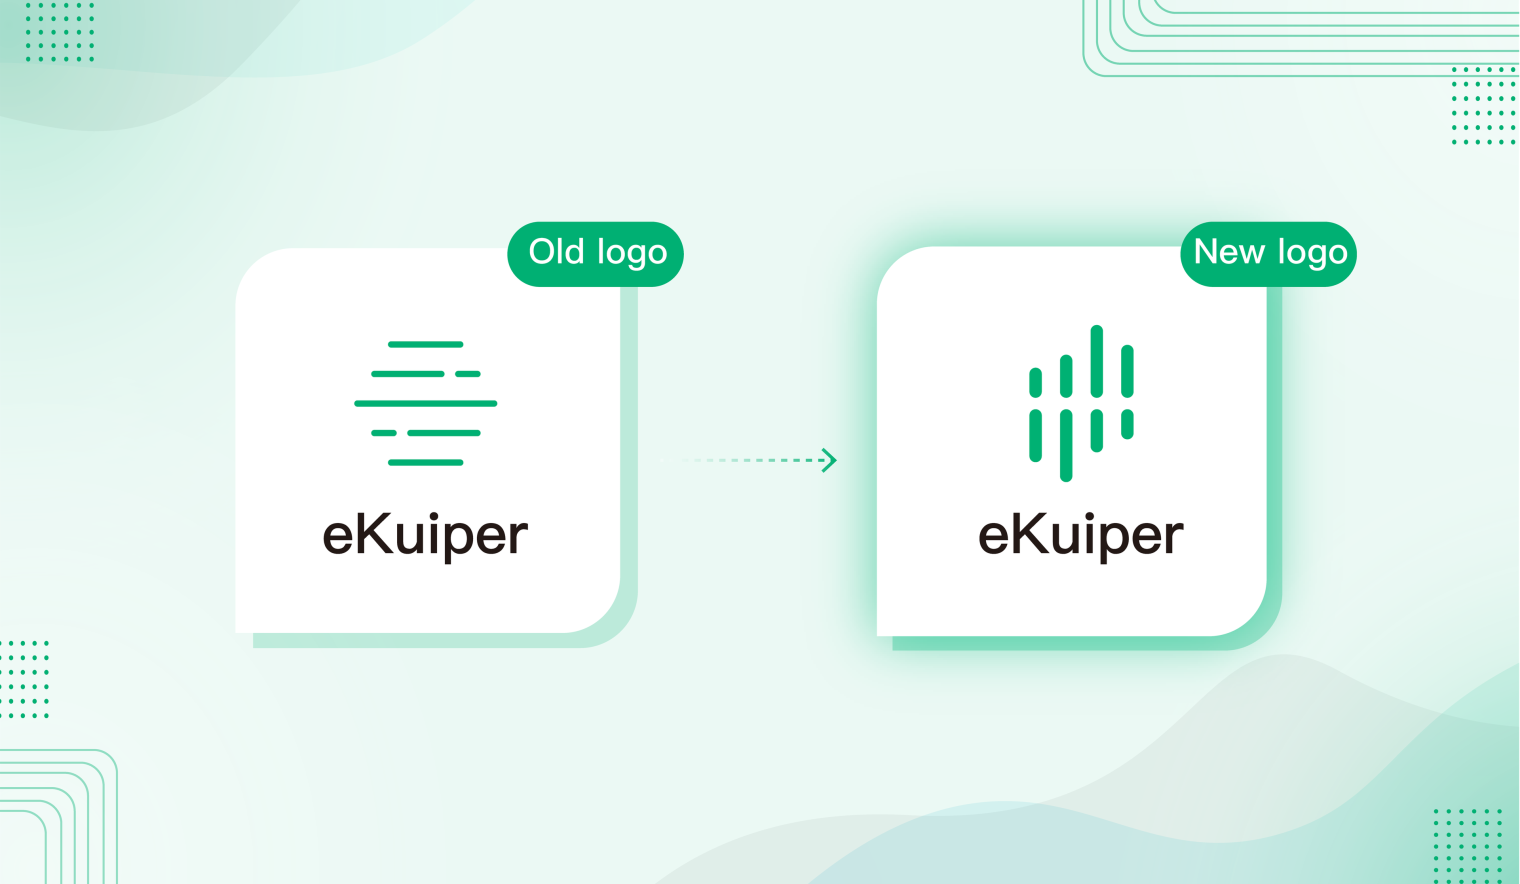 eKuiper 新旧 Logo 对比